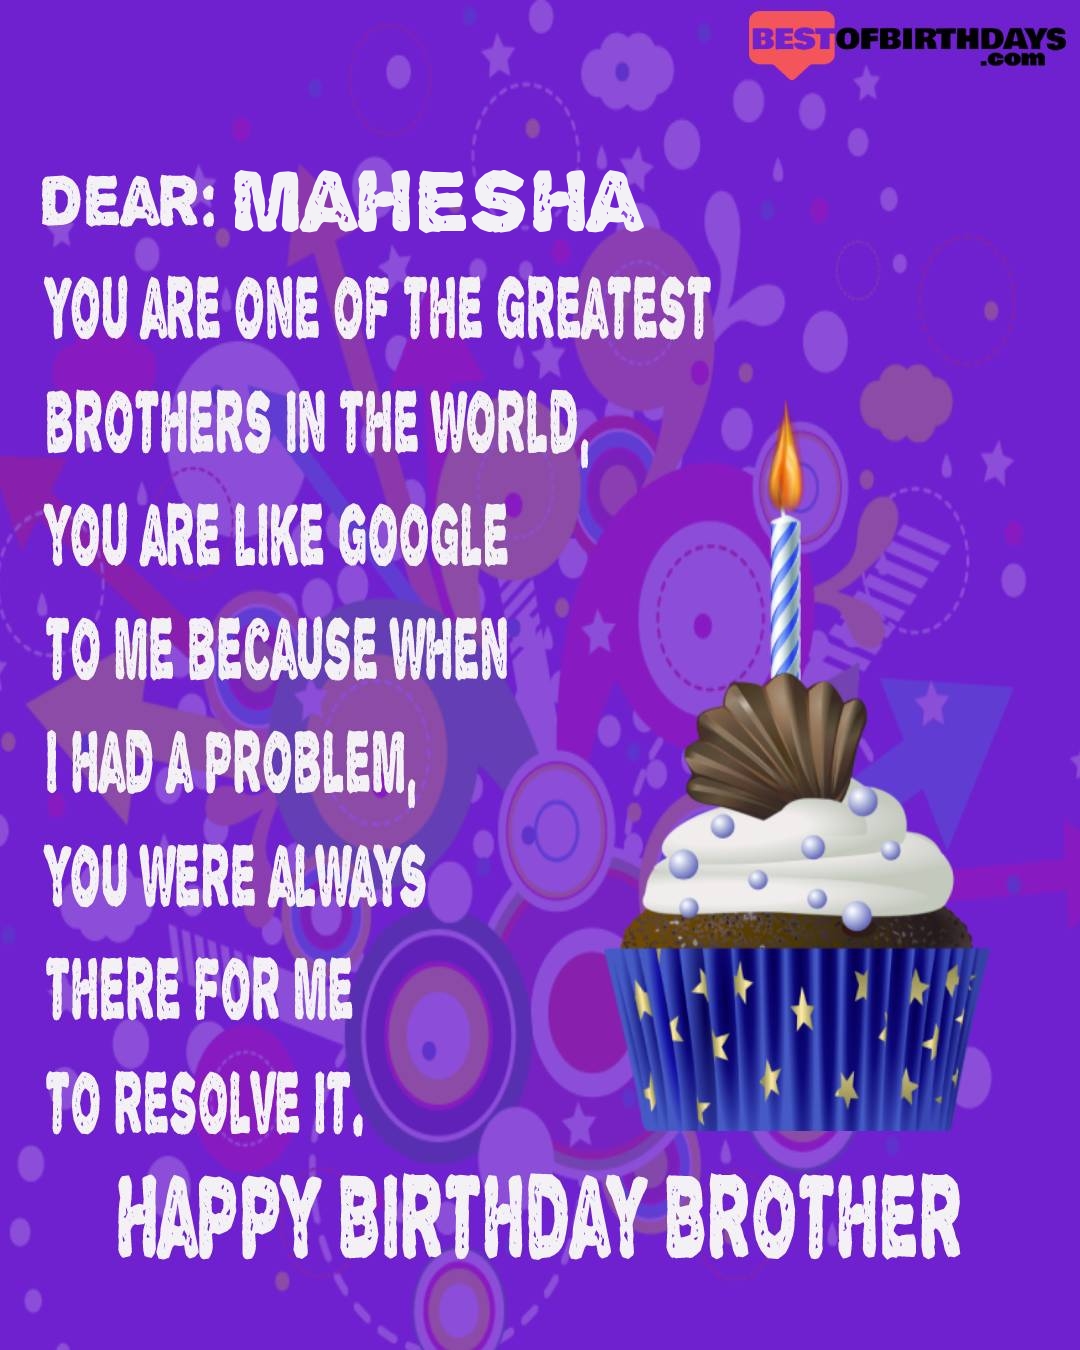 Happy birthday mahesha bhai brother bro